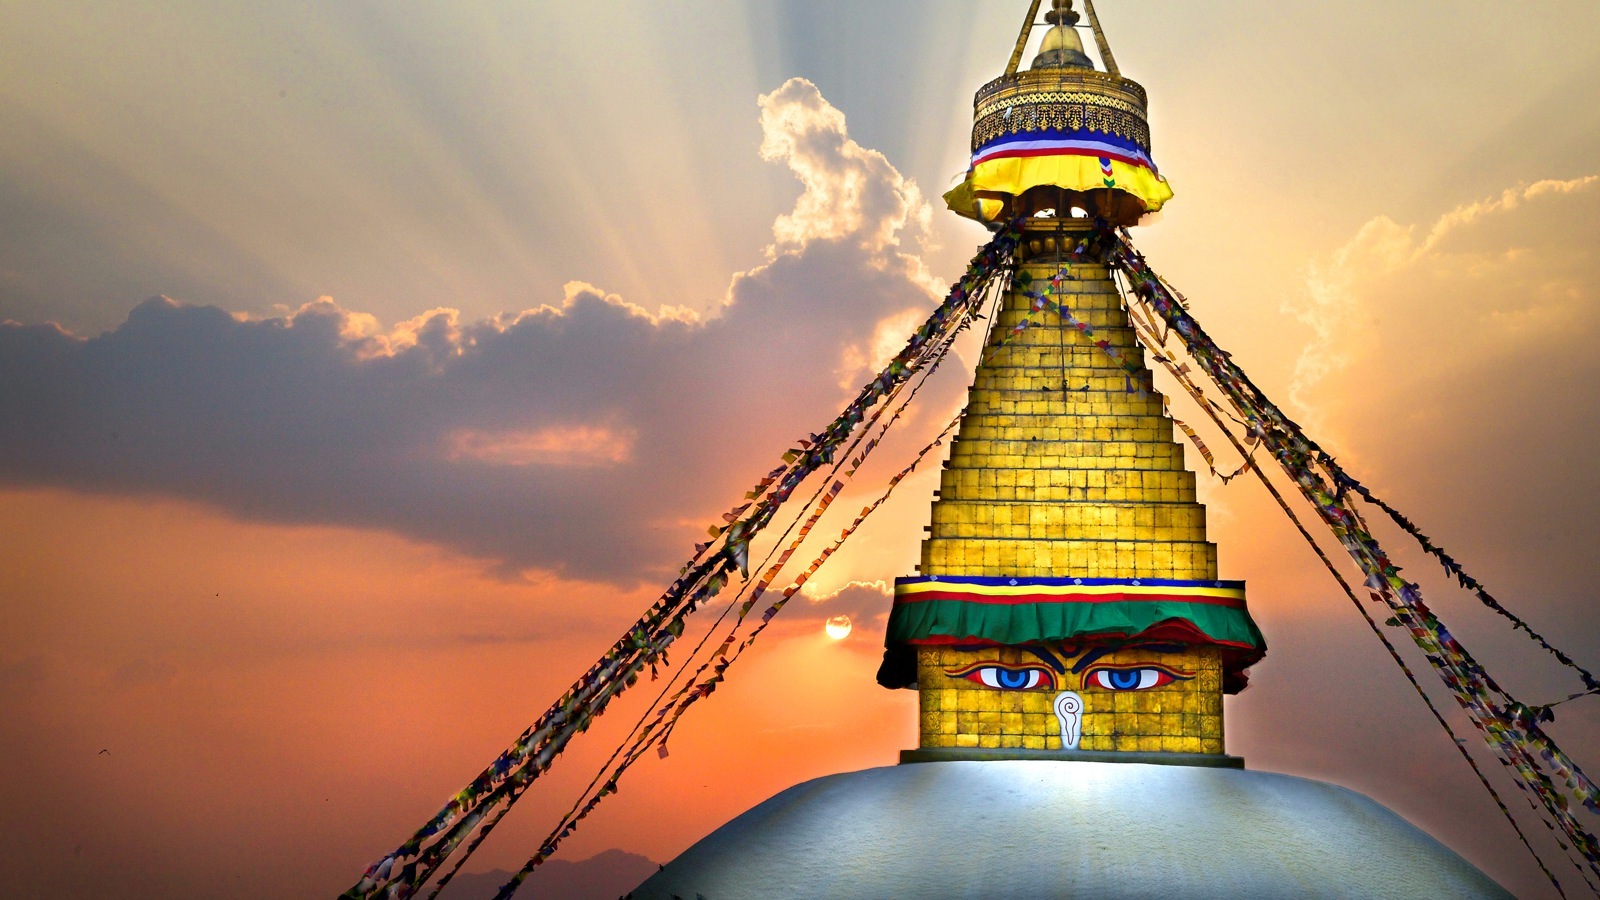 Losar 2022 in Kathmandu, Nepal | Everfest